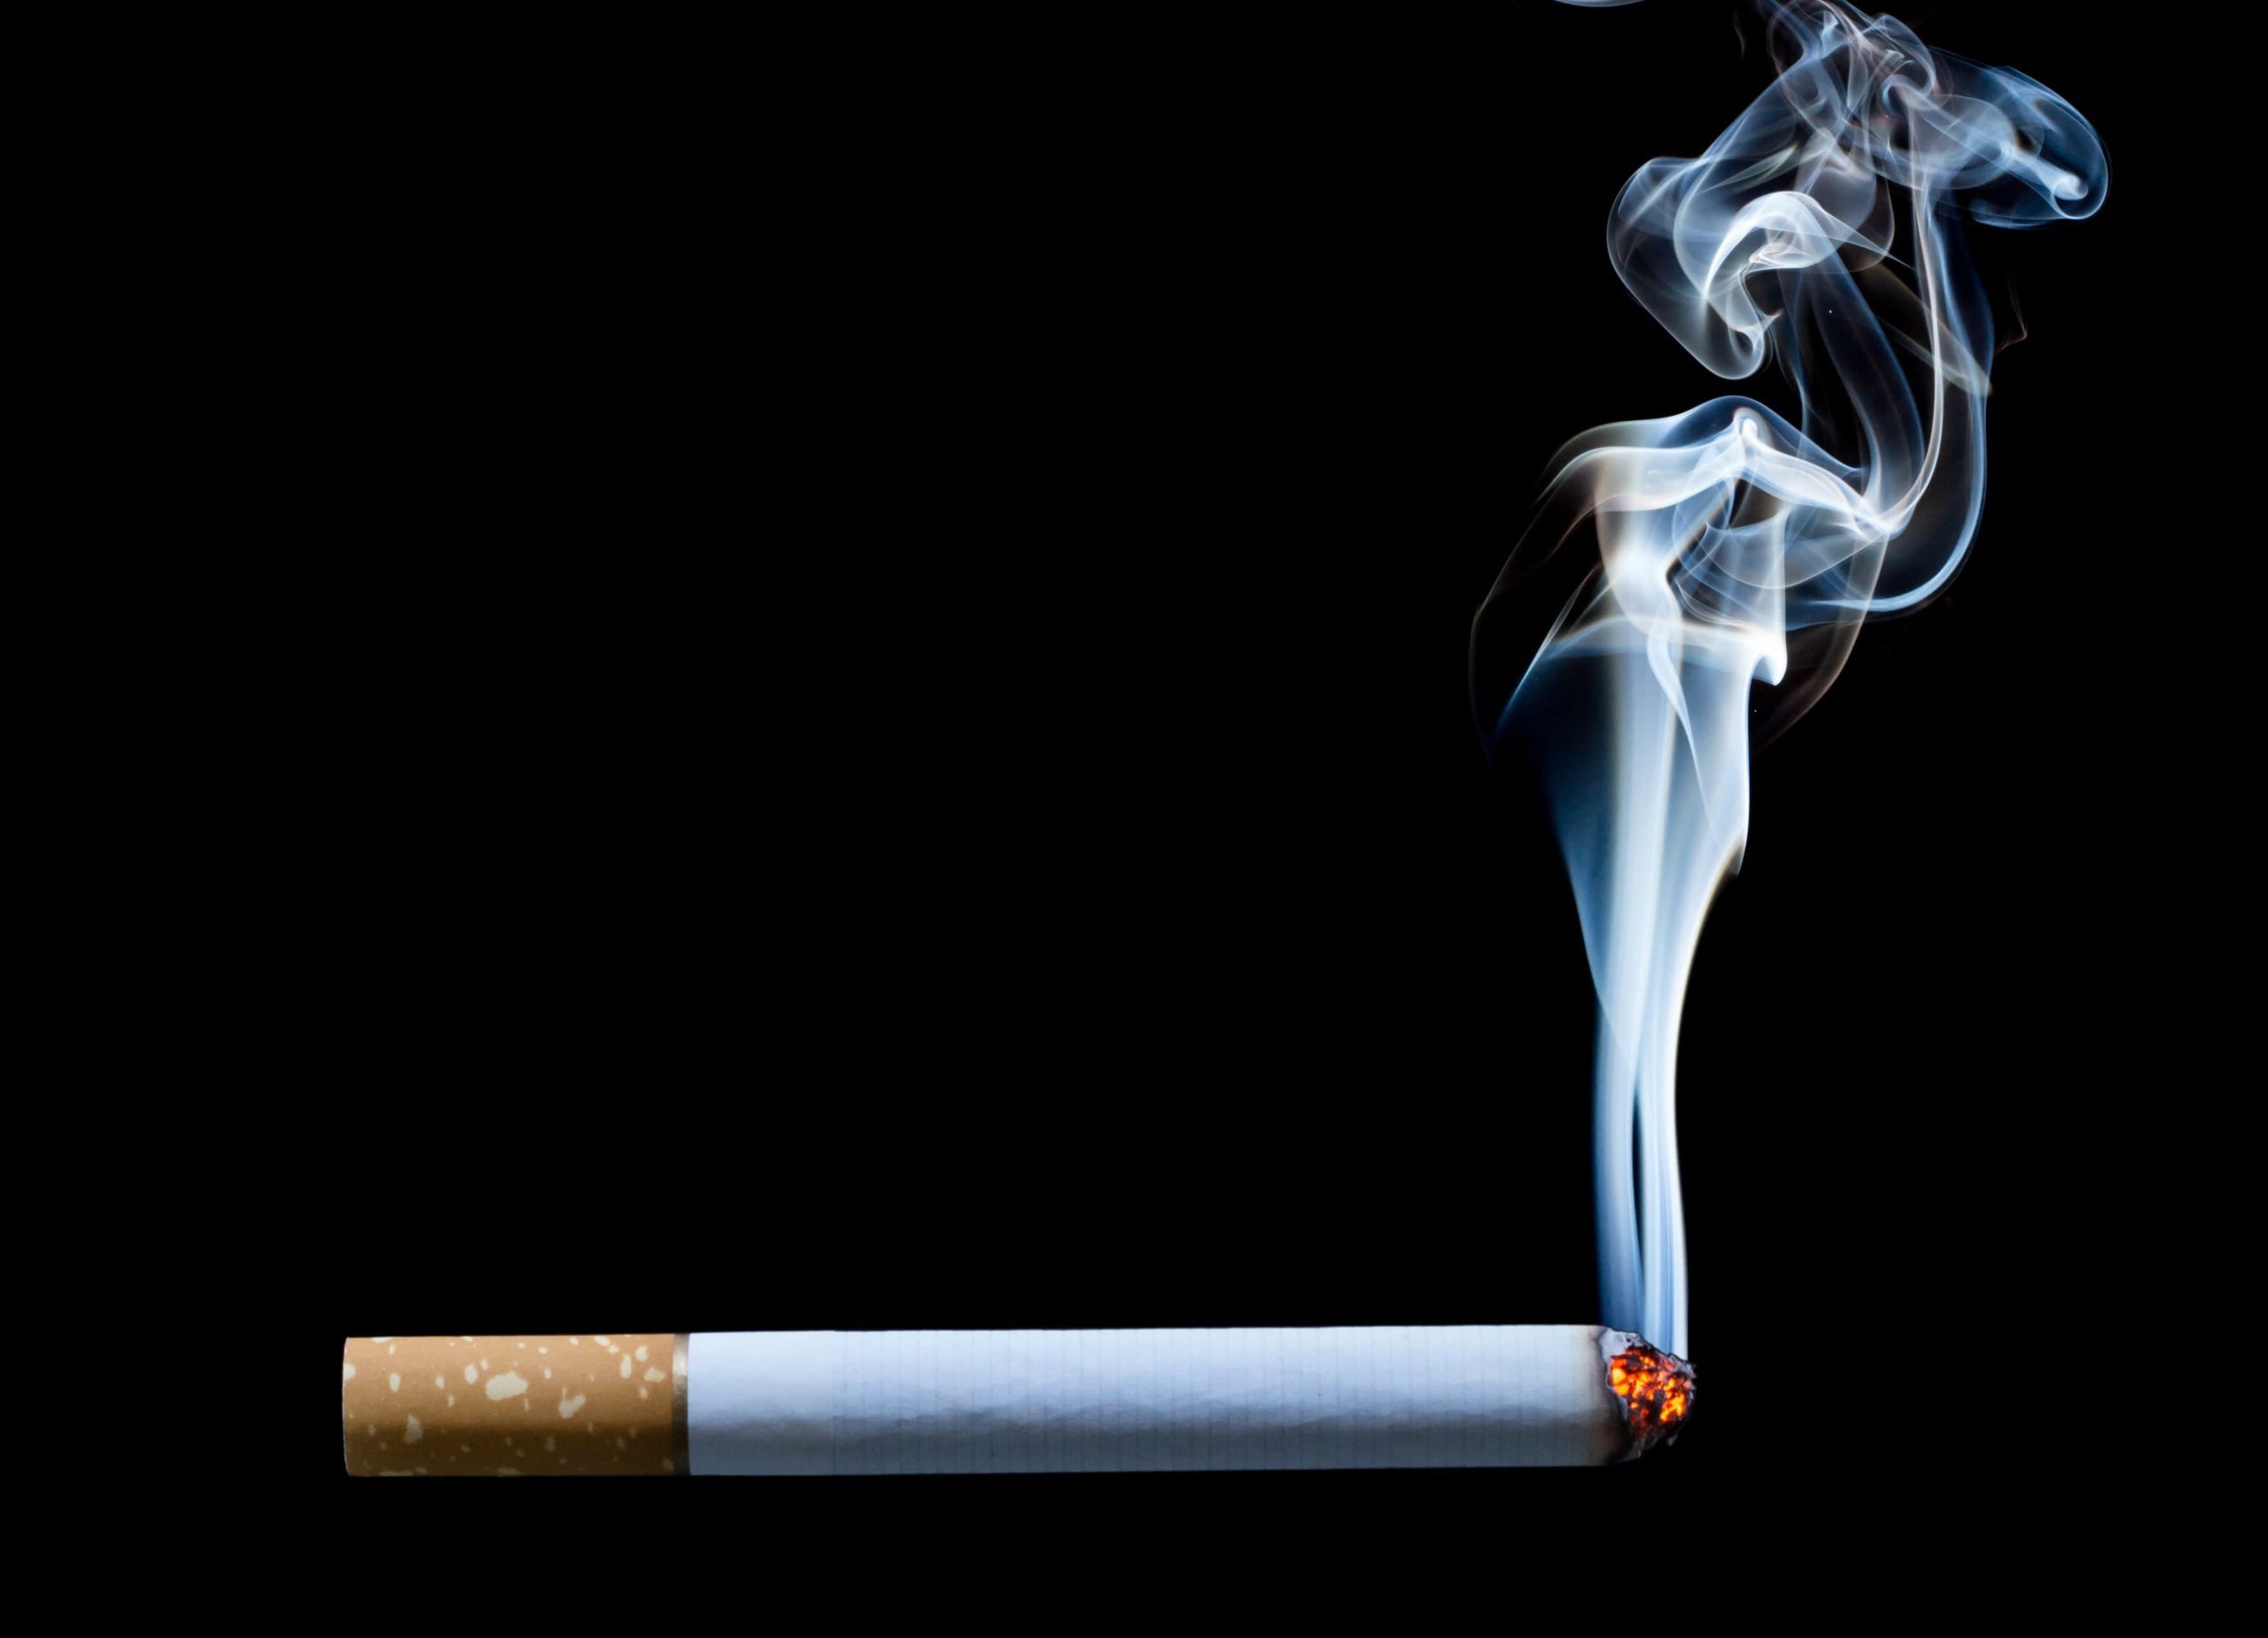 lit cigarette burning with a black background